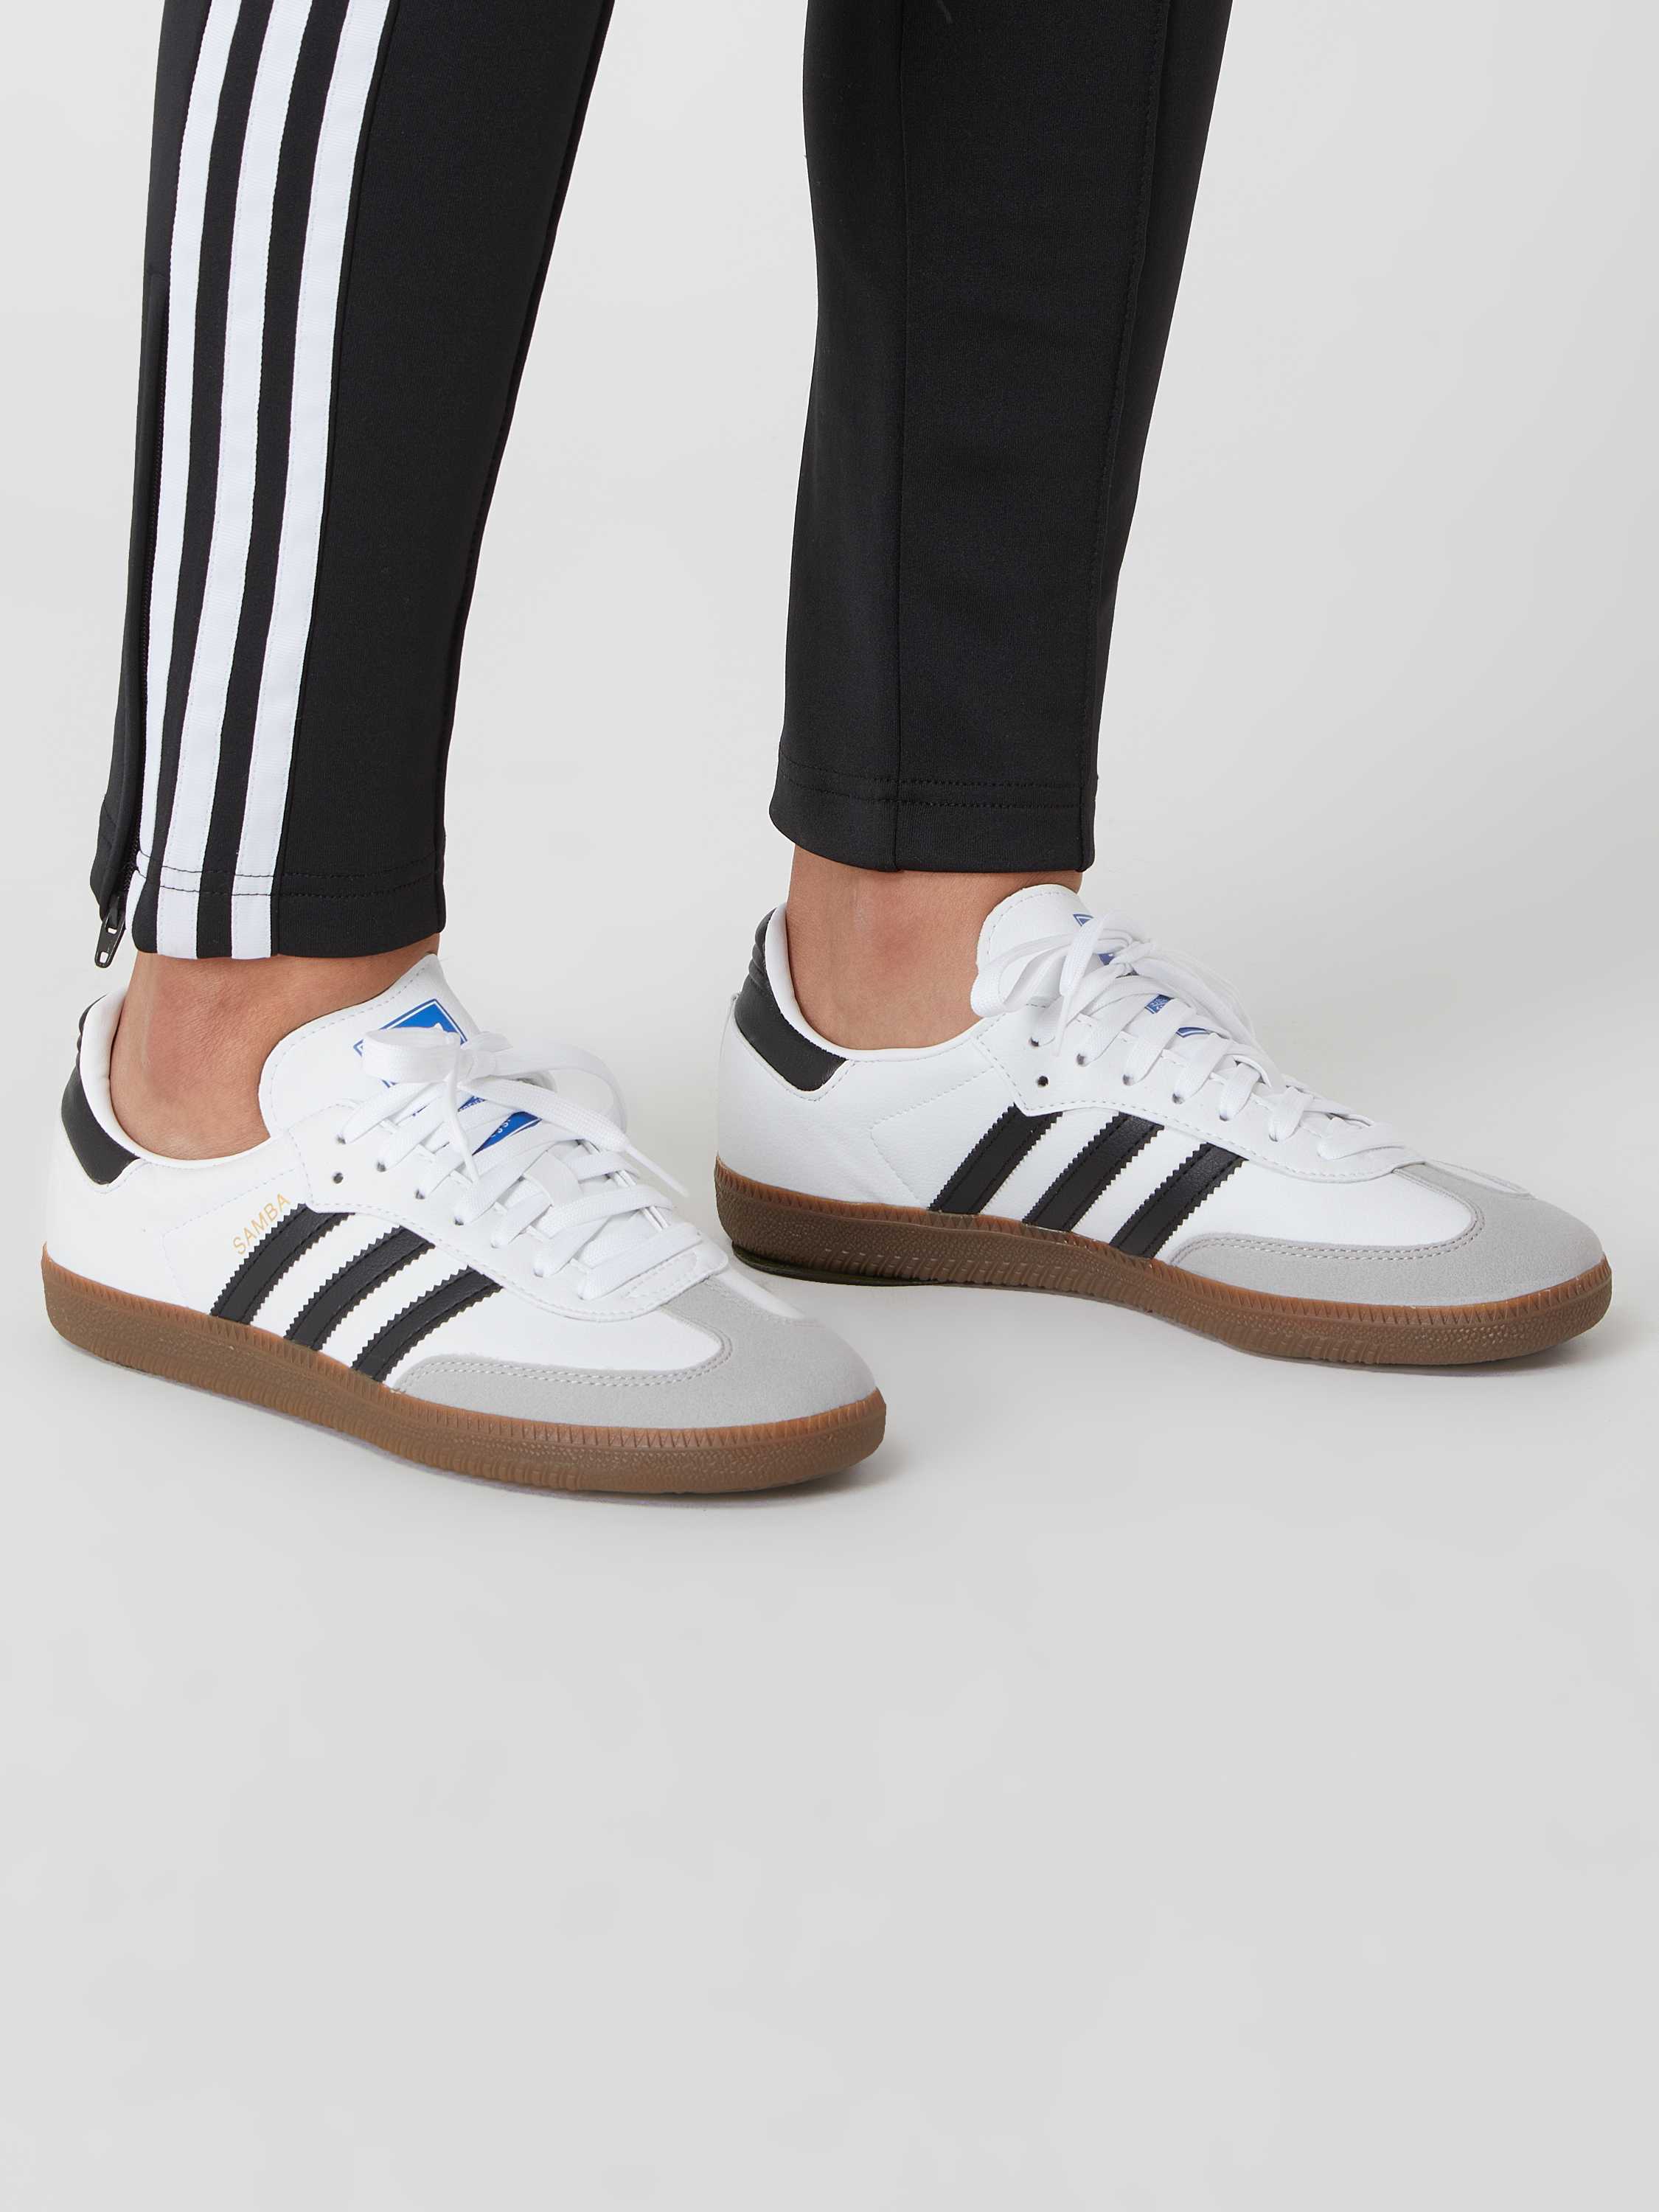 heno Desagradable cielo adidas Originals Sneaker in Leder-Optik Modell 'Samba' (weiß) online kaufen